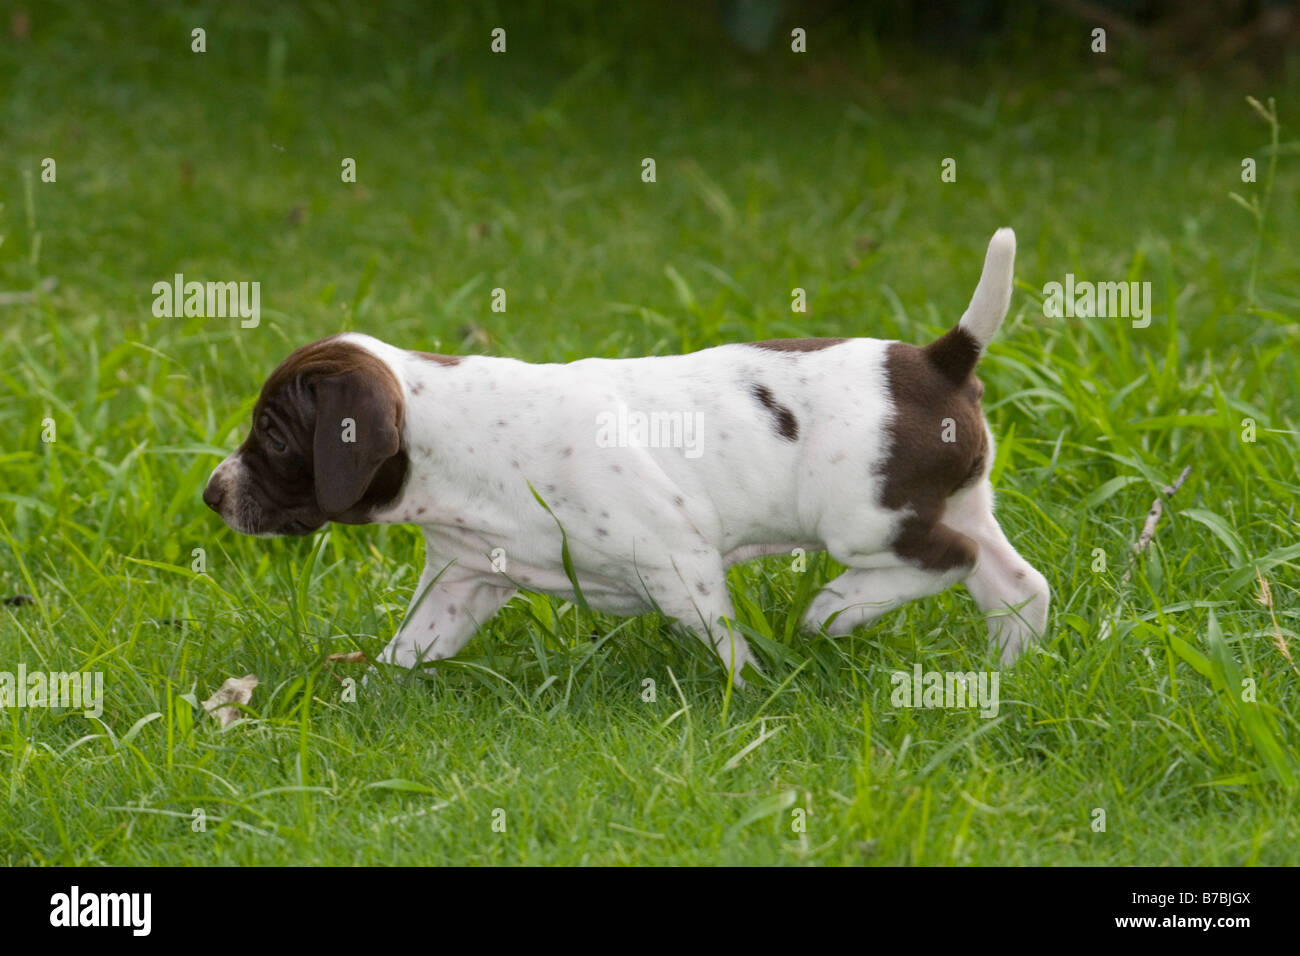 cute little puppy walking in grass Stock Photo